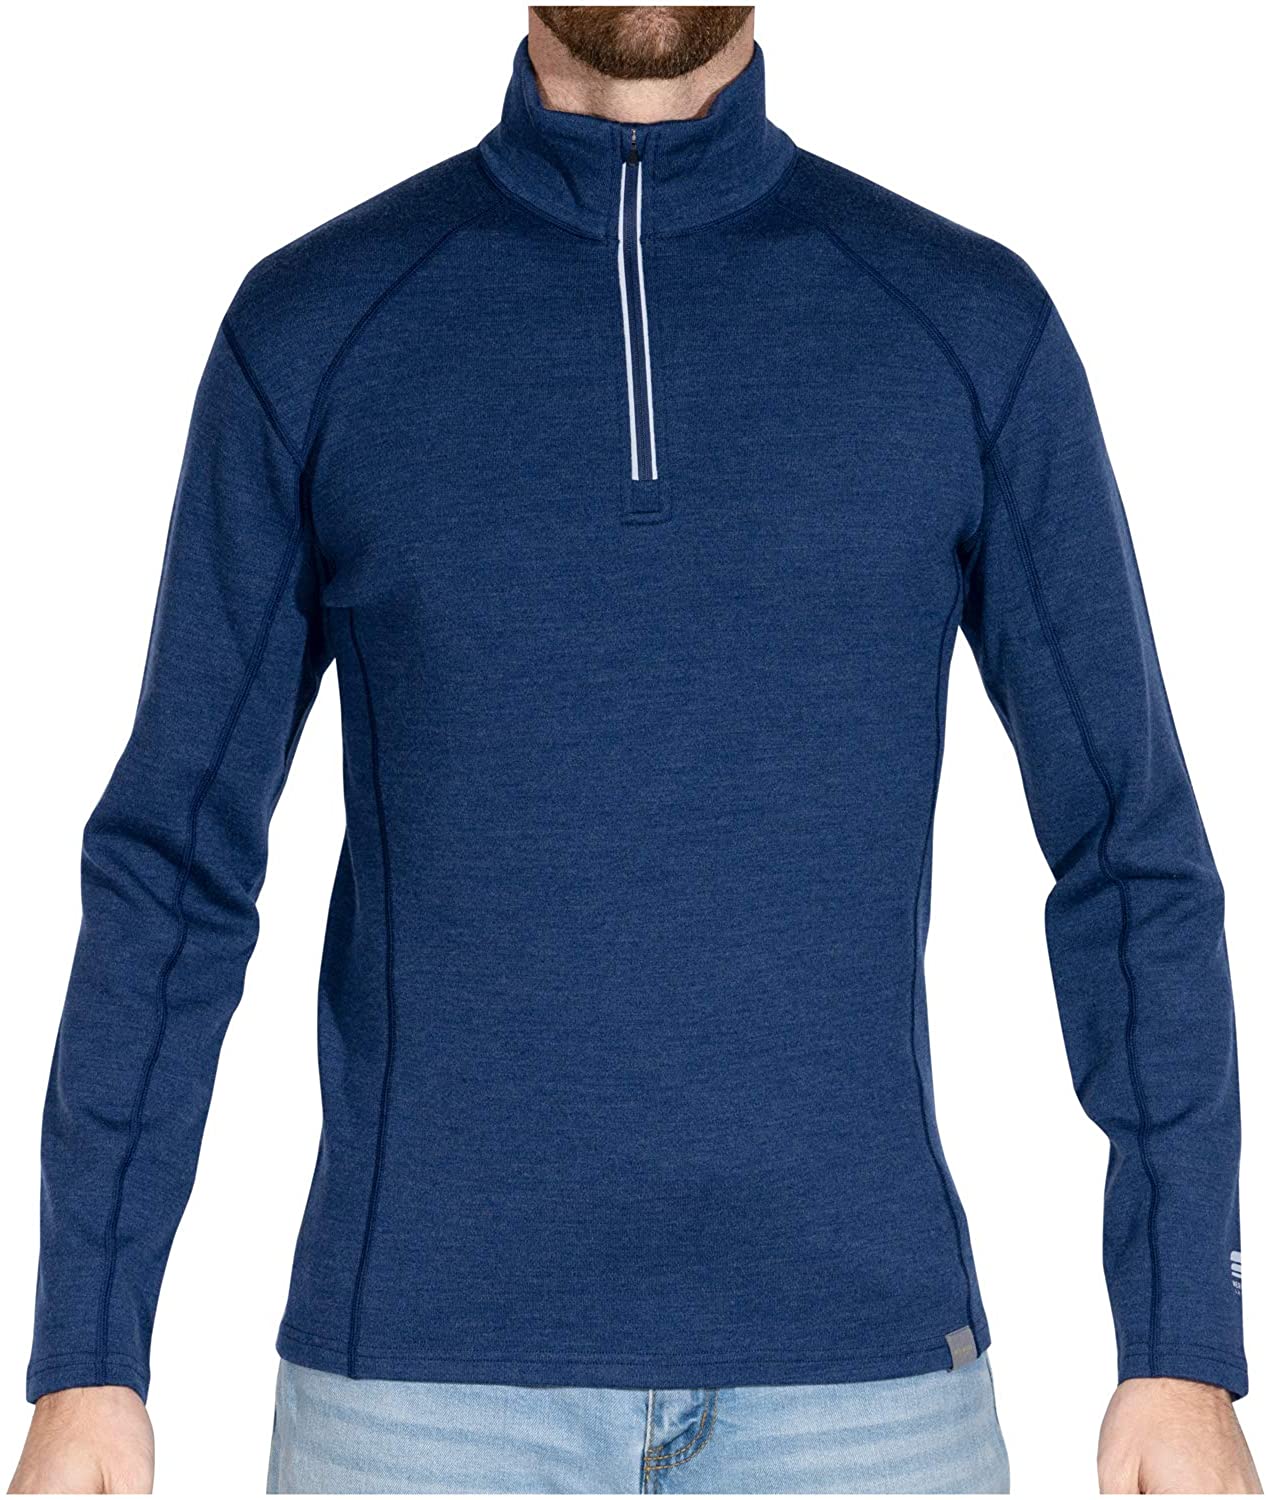 MERIWOOL Mens Base Layer 100% Merino Wool Heavyweight 400g Half Zip Sweater  for | eBay